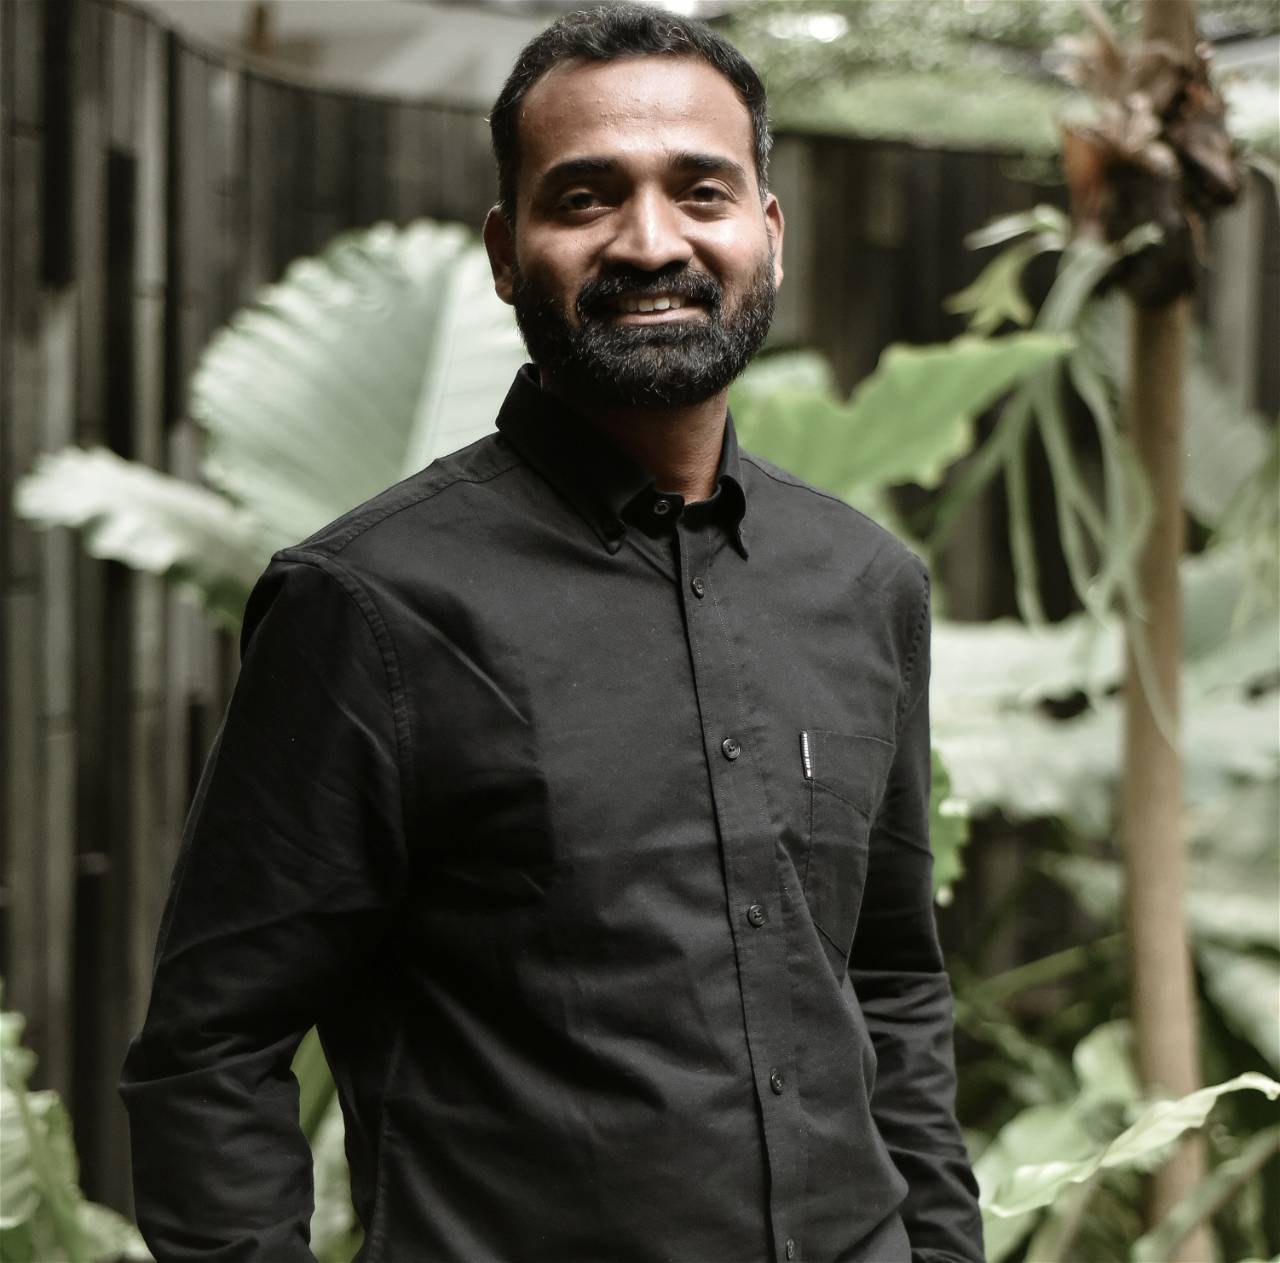 Founder & CEO of Aquaconnect, Rajamanohar Somasundaram